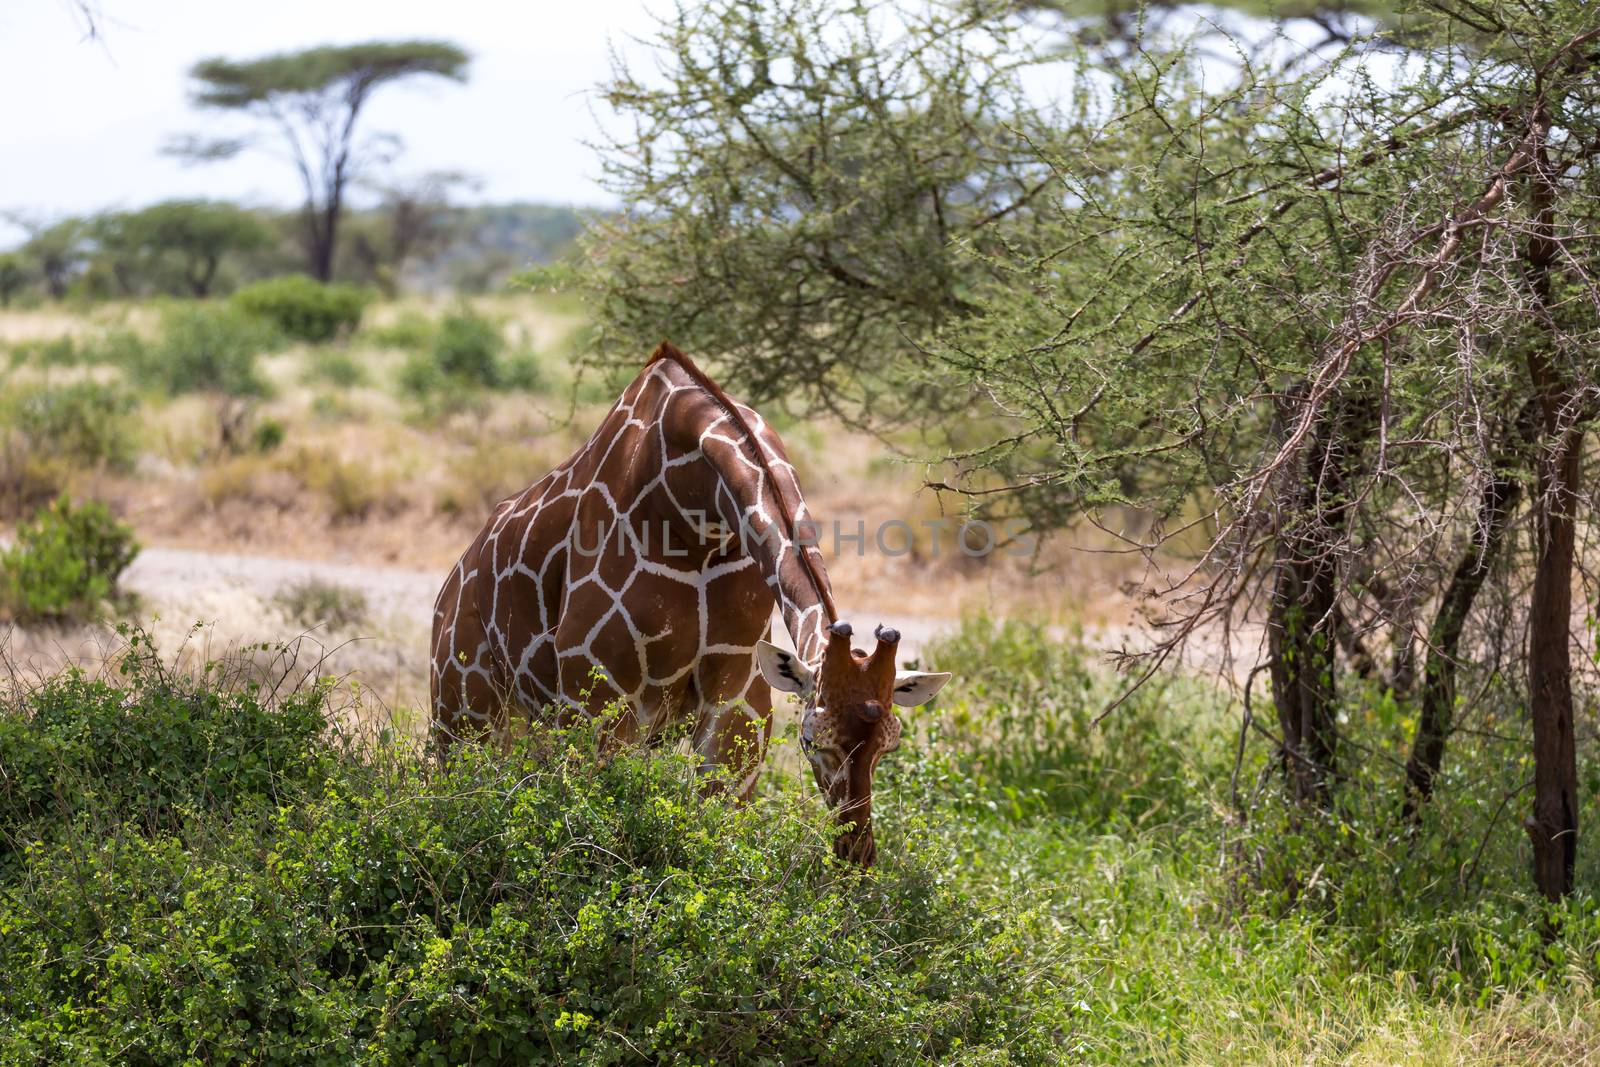 One giraffe eats the leaves of a bush